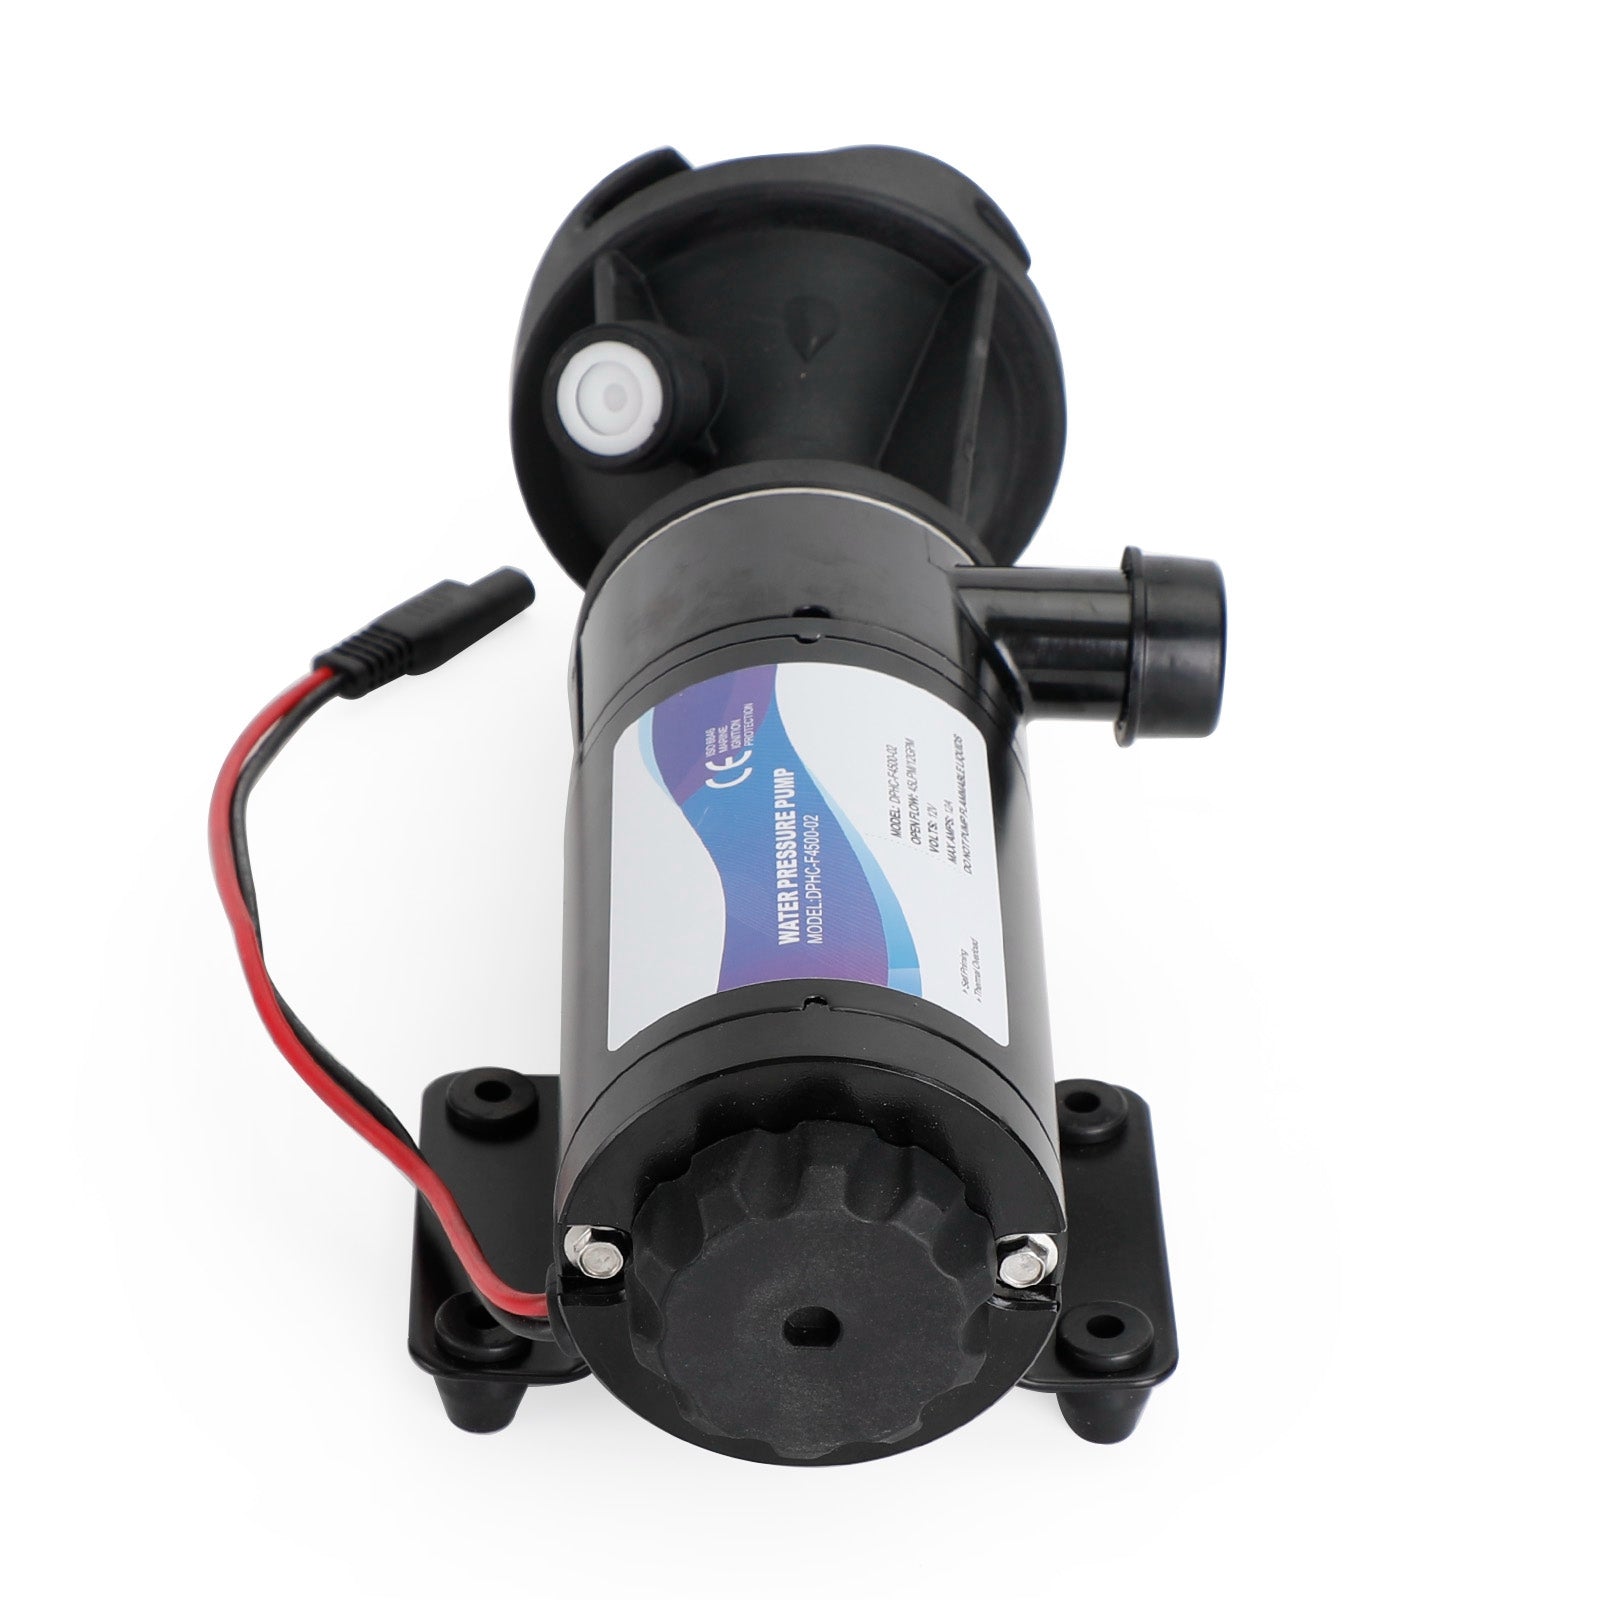 Portable 12V RV Macerator Pump for Waste Water Processing - Sewage Chopper Pump